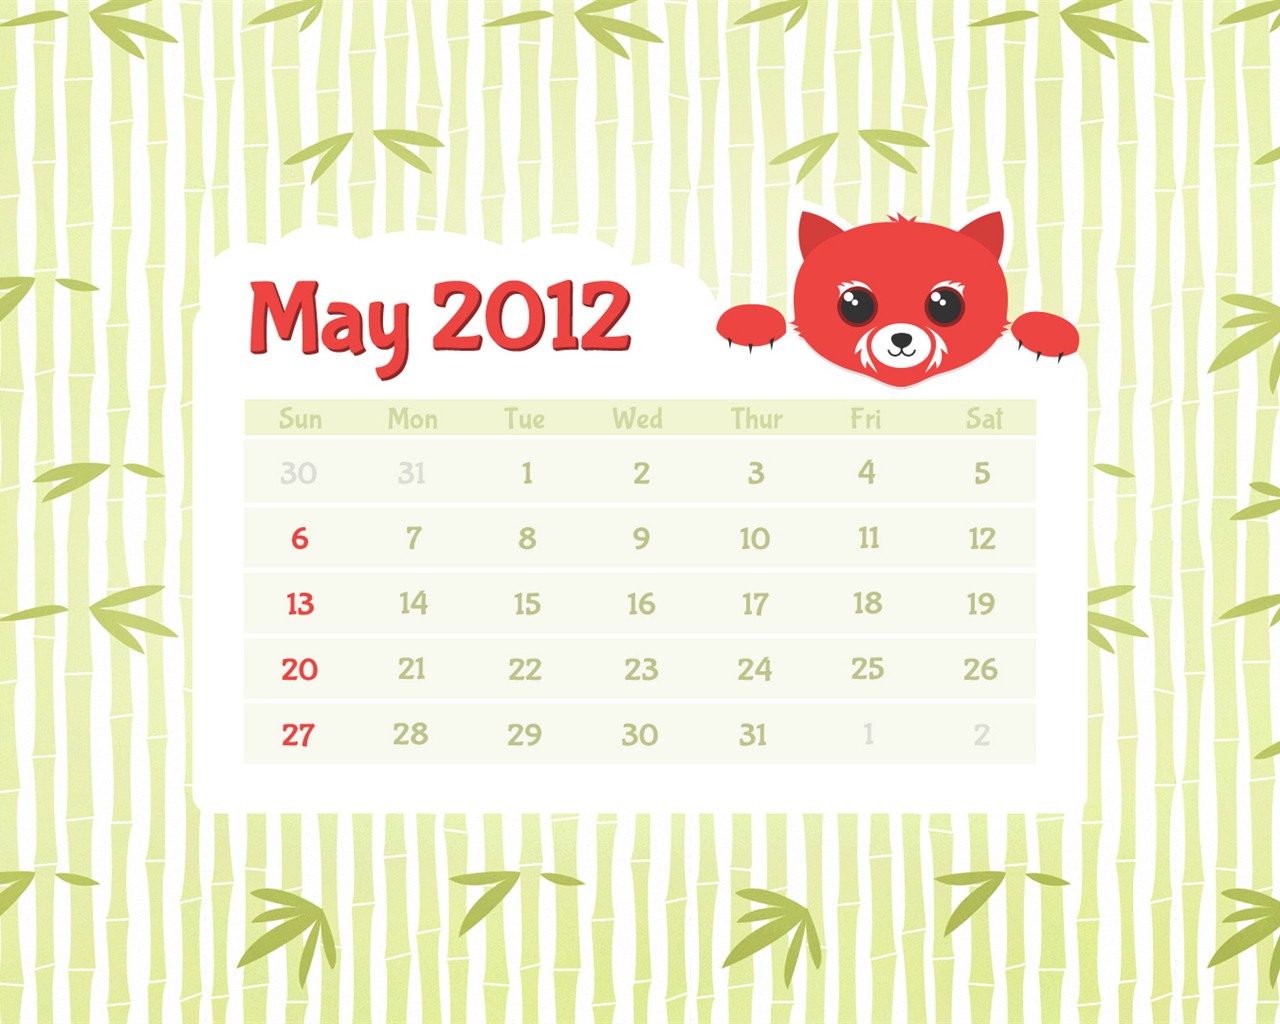 Mai 2012 fonds d'écran calendrier (2) #6 - 1280x1024